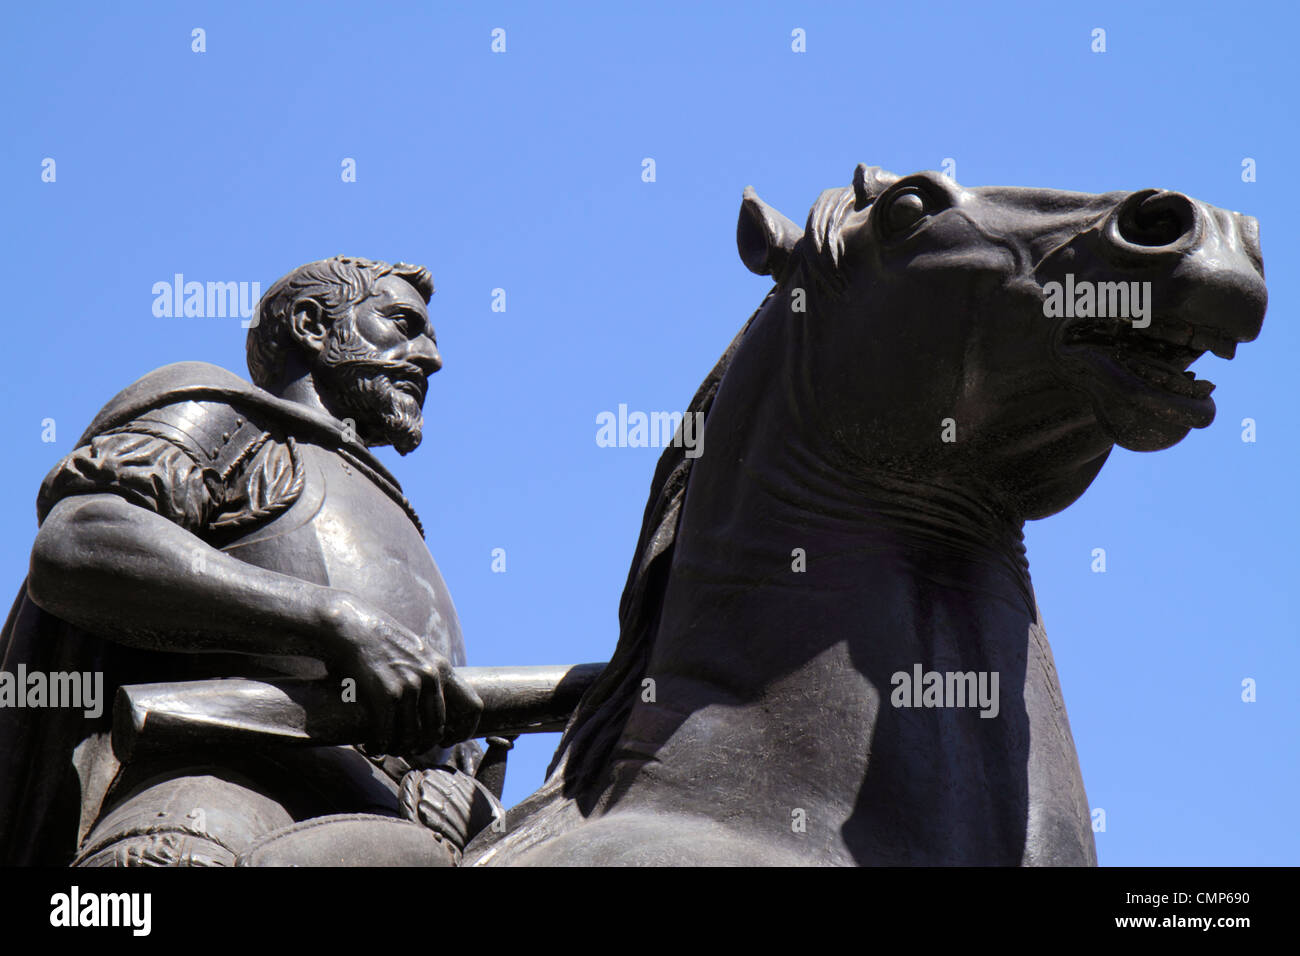 Santiago Chile,Plaza de Armas,public square,equestrian statue,monument,Don Pedro Valdivia,colonial history,city founder,horse,armor,Latin America,Sout Stock Photo